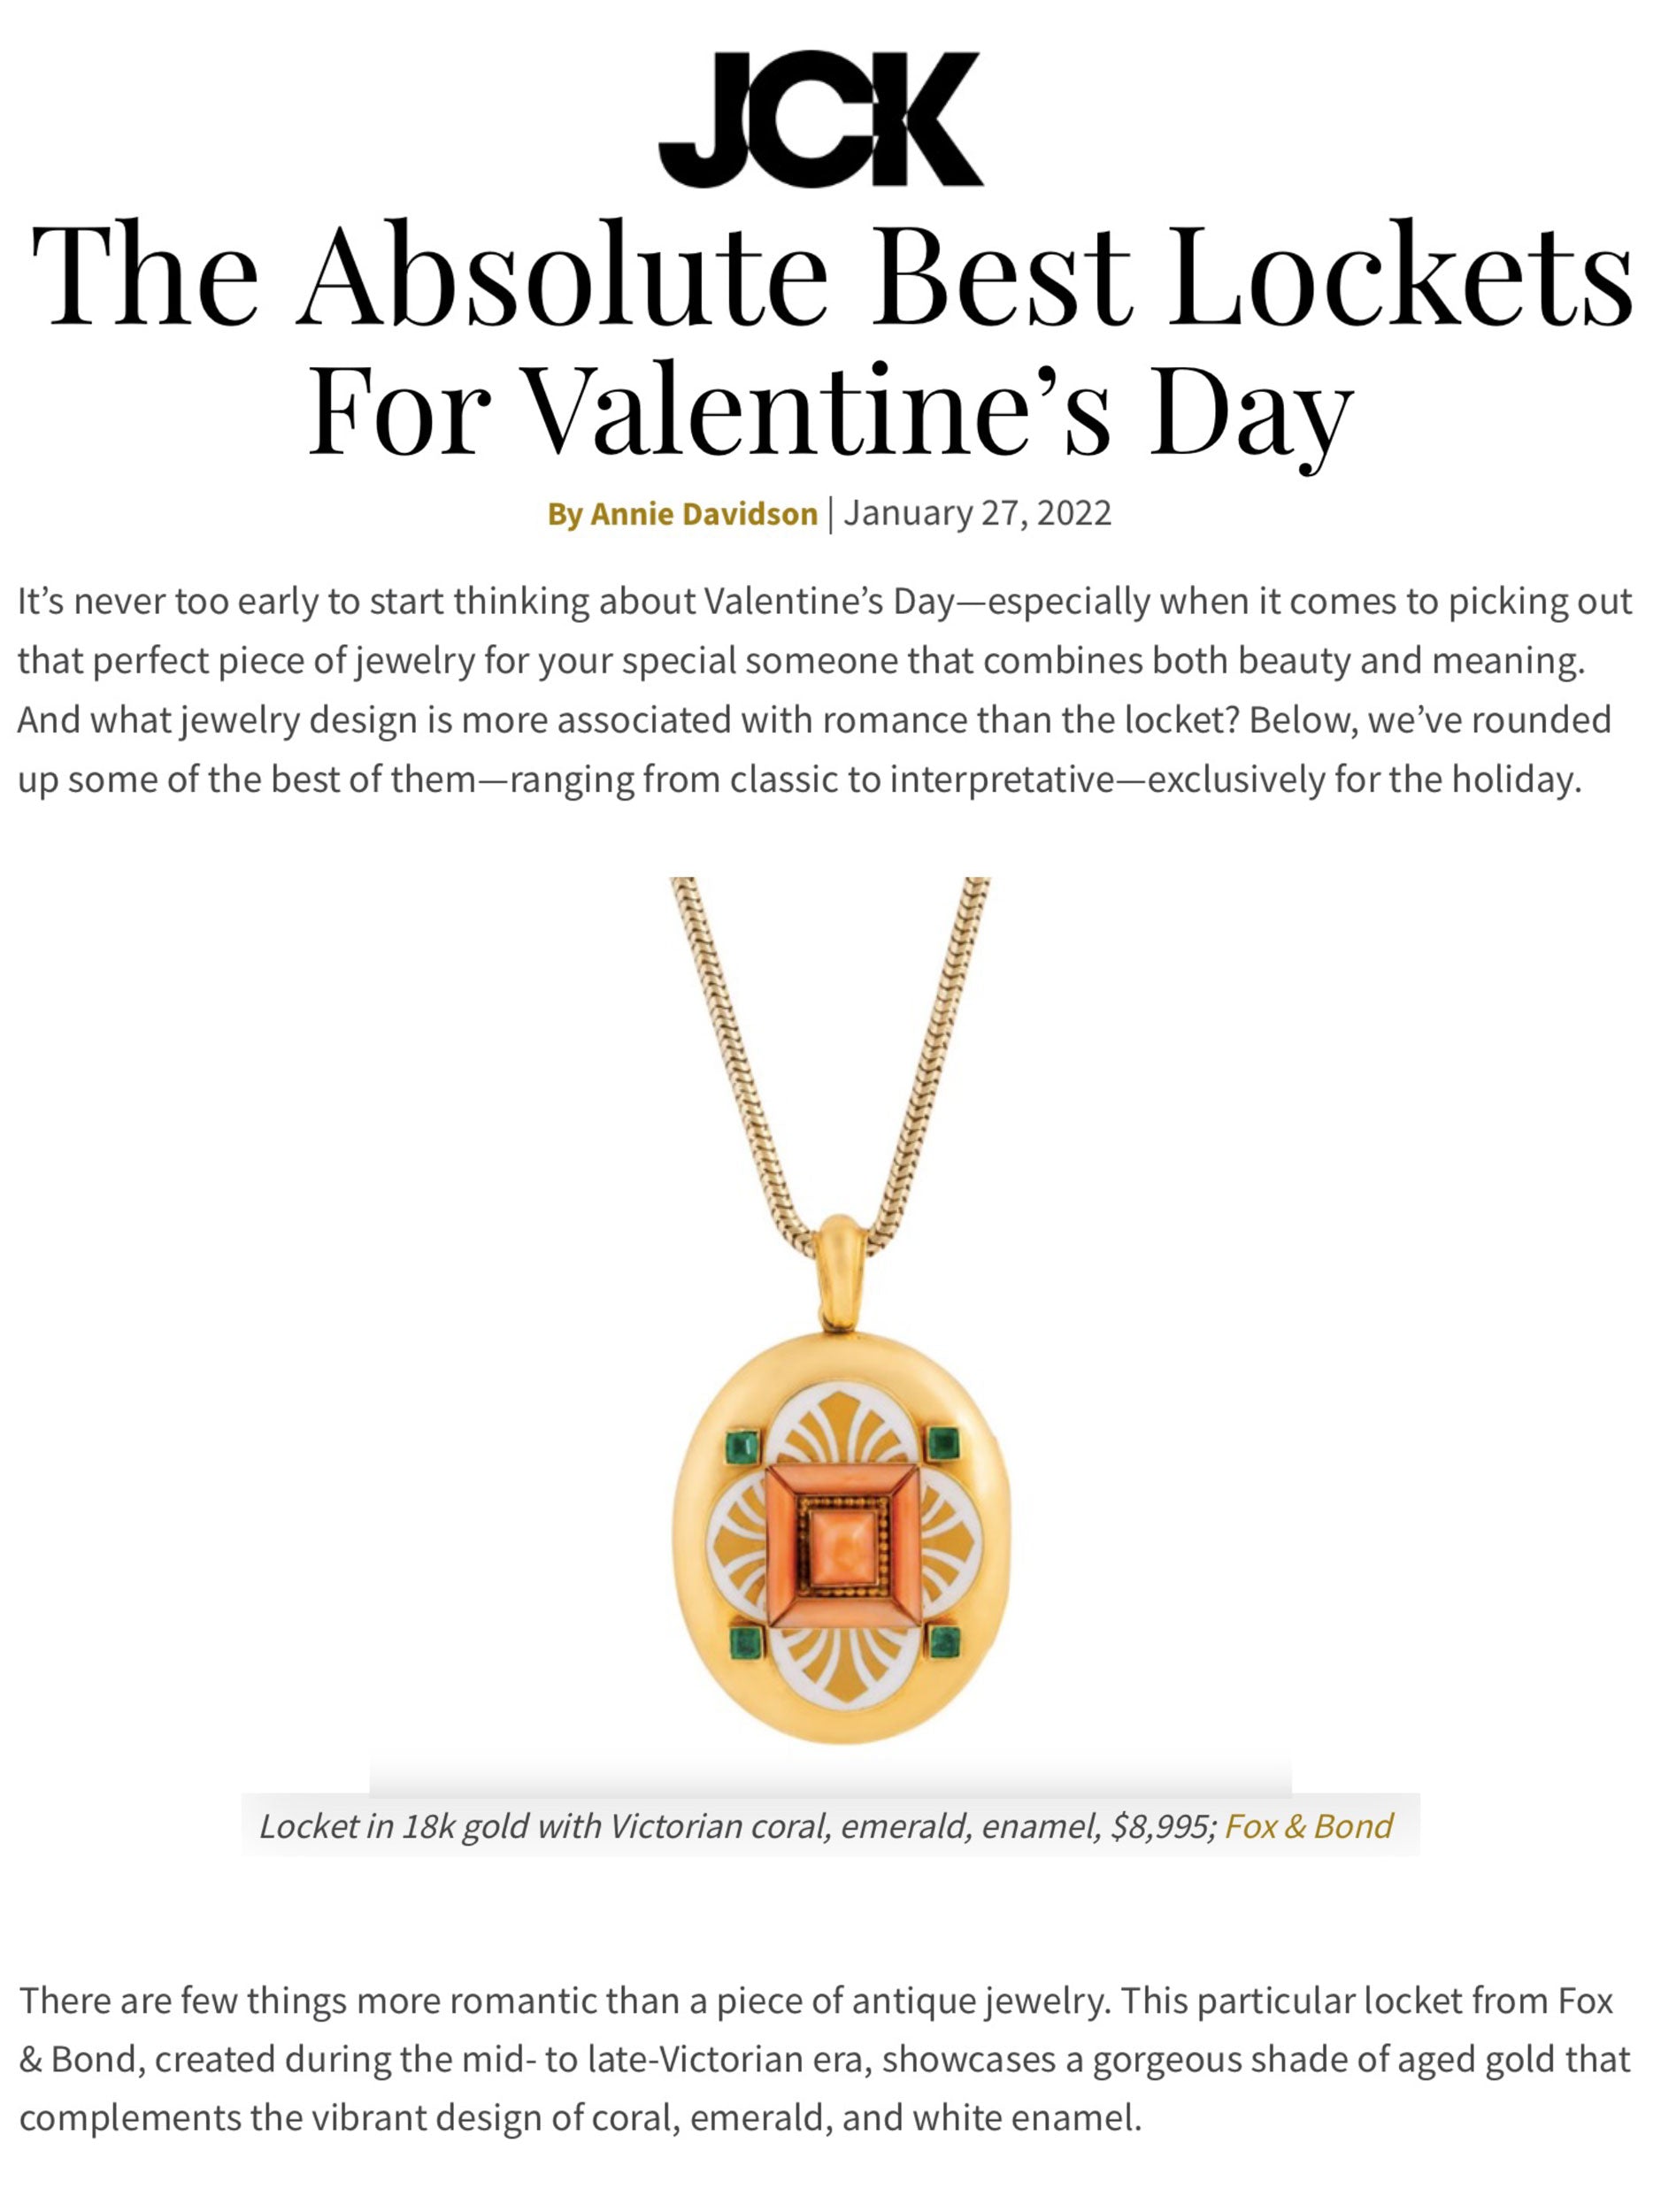 JCK: The Absolute Best Lockets For Valentine’s Day